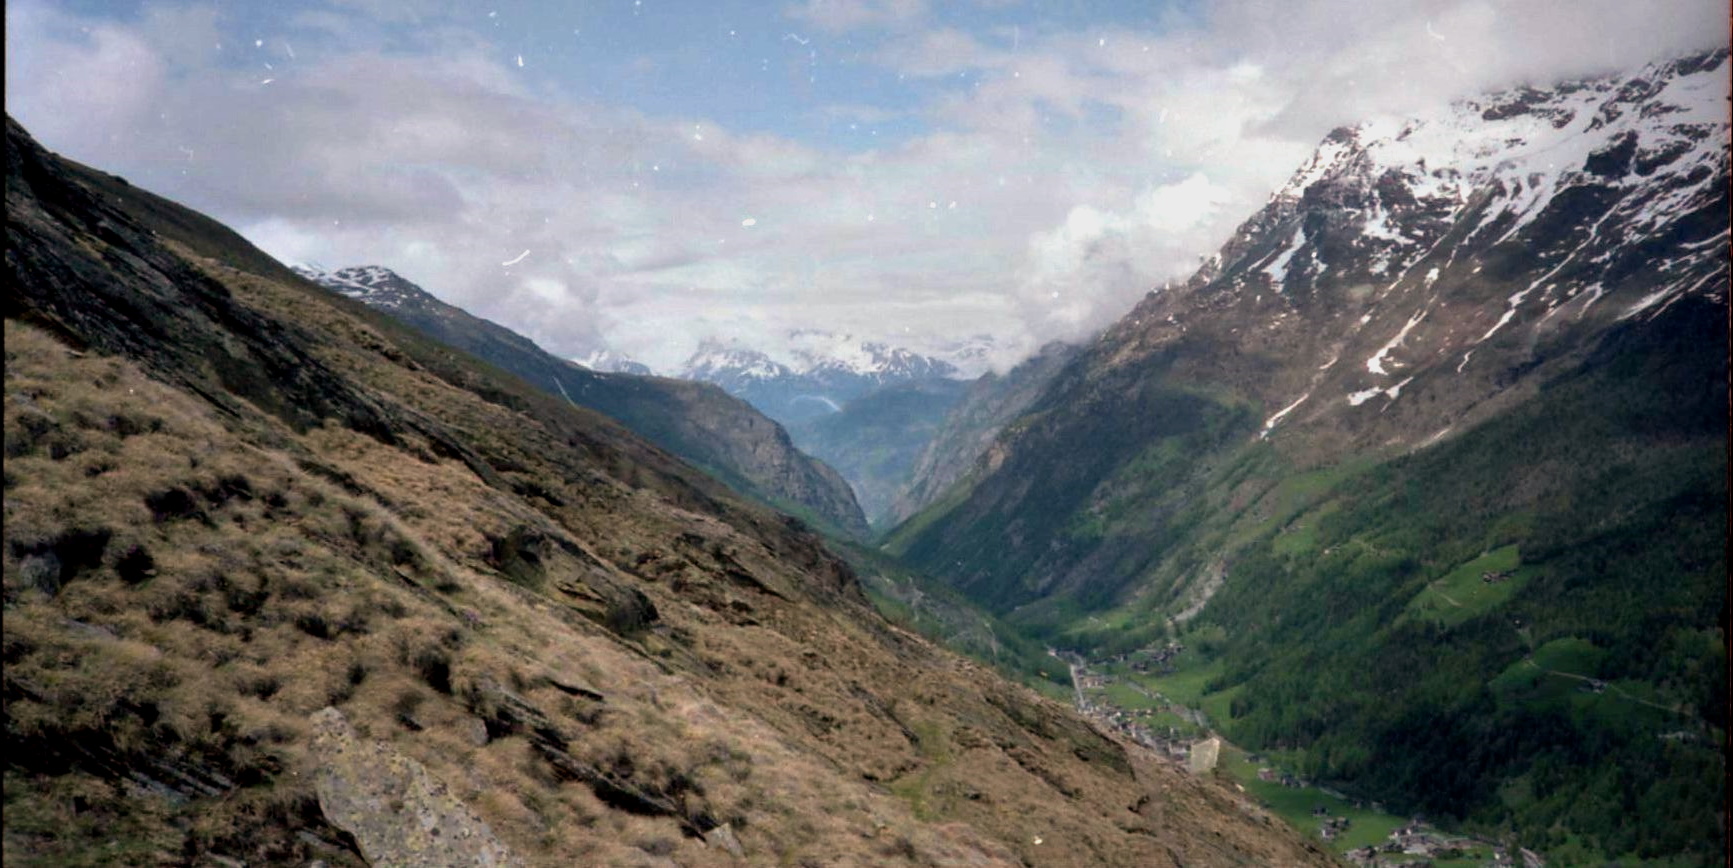 Saas Valley in the Valais Region